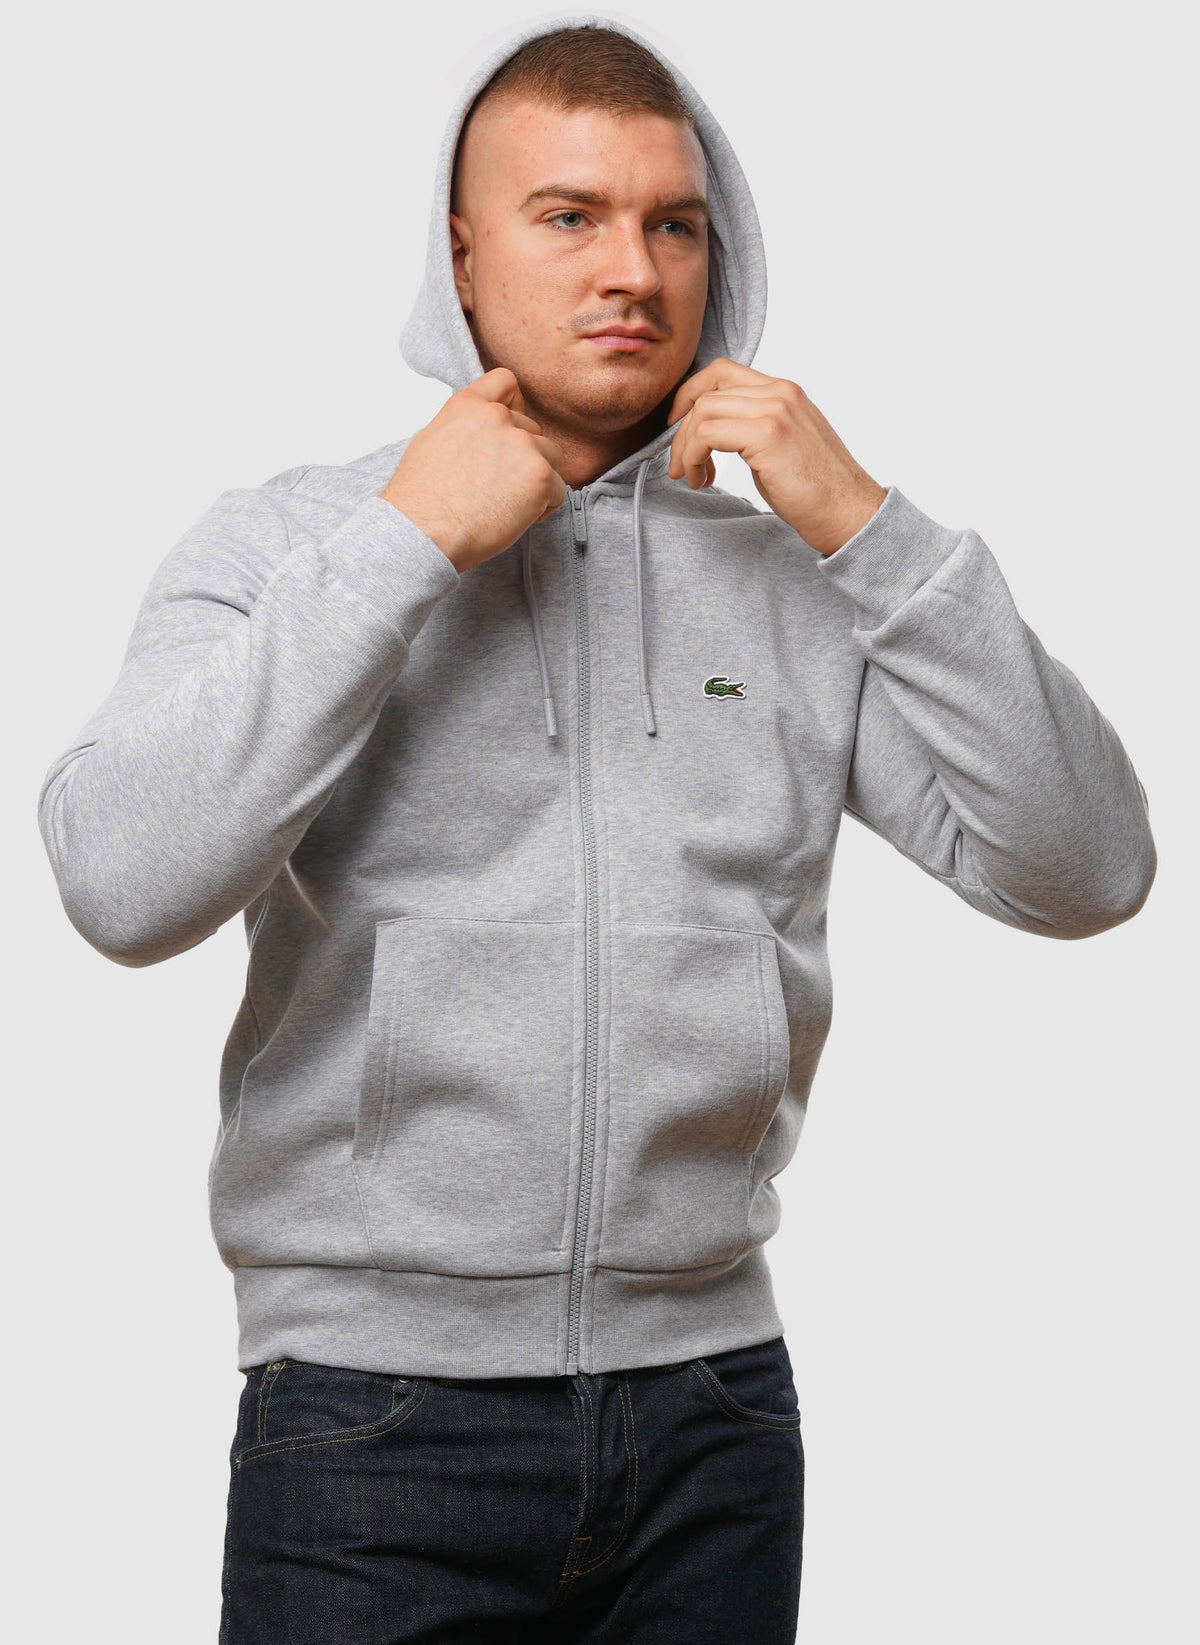 Classic Hooded Sweatshirt Jacket - Silver Chine